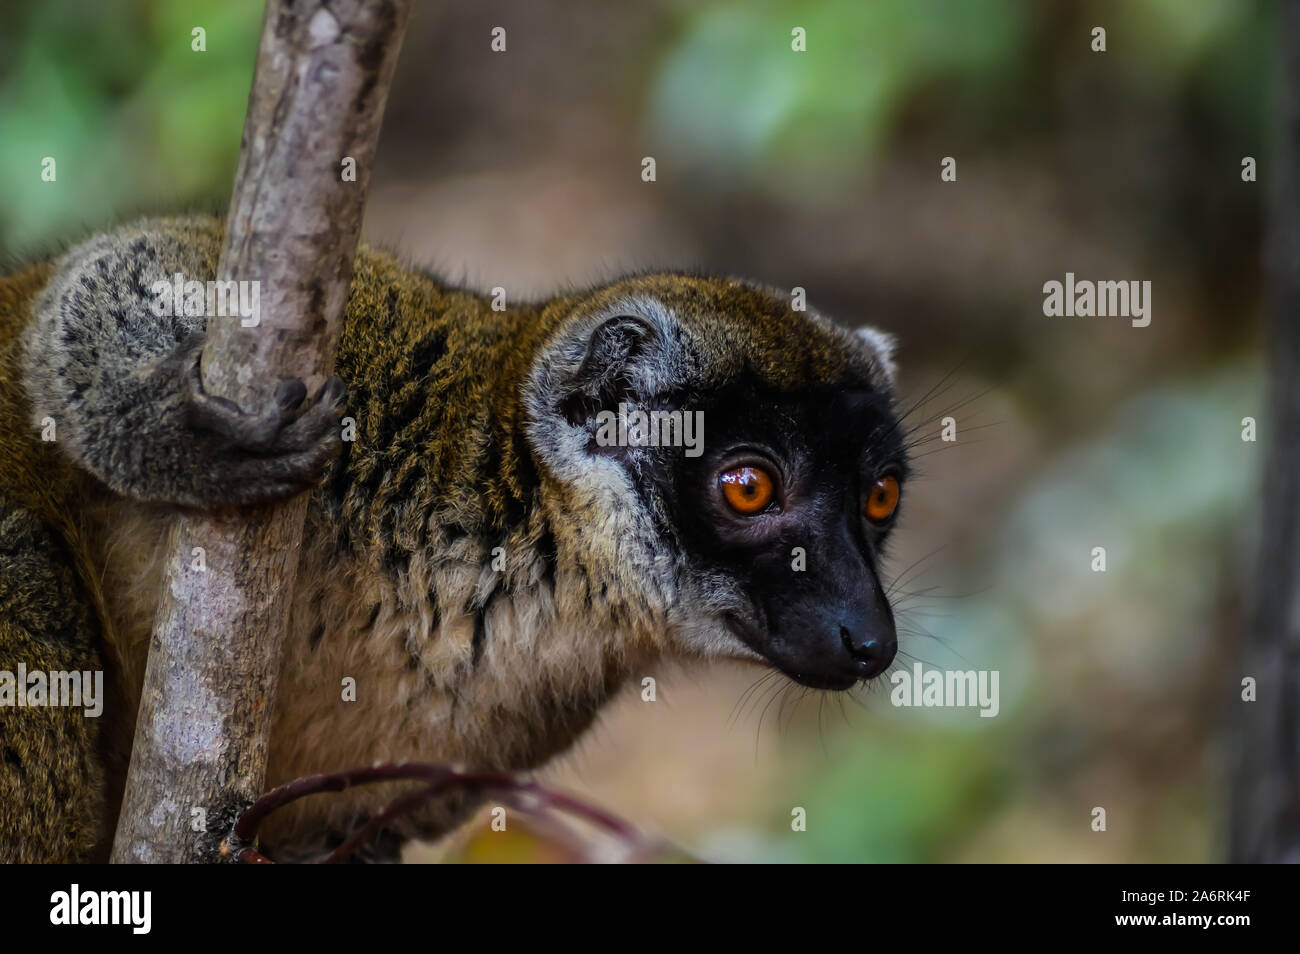 Madagascar lemur cuyo nombre es marrón o lemur Lemur salvaje o marrón maki. Foto de stock